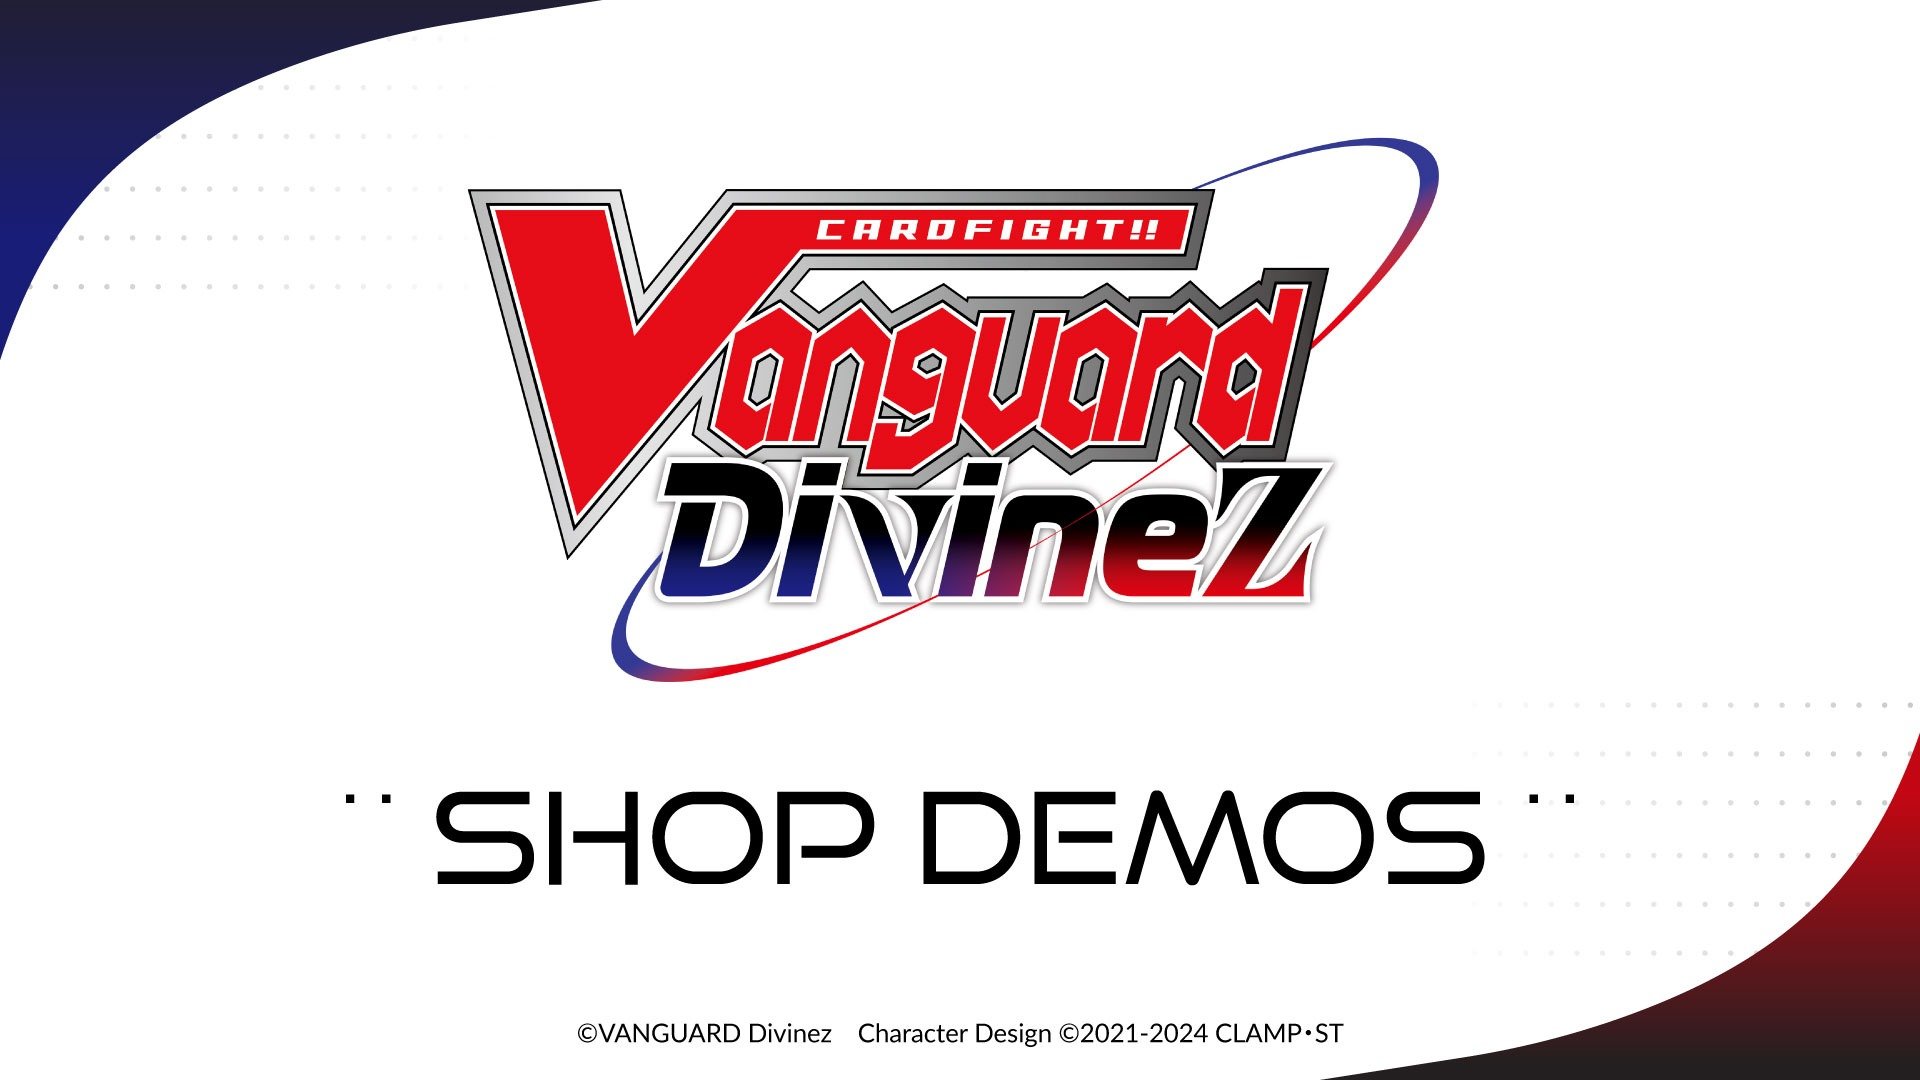 CARDFIGHT!! VANGUARD Divinez shop demo